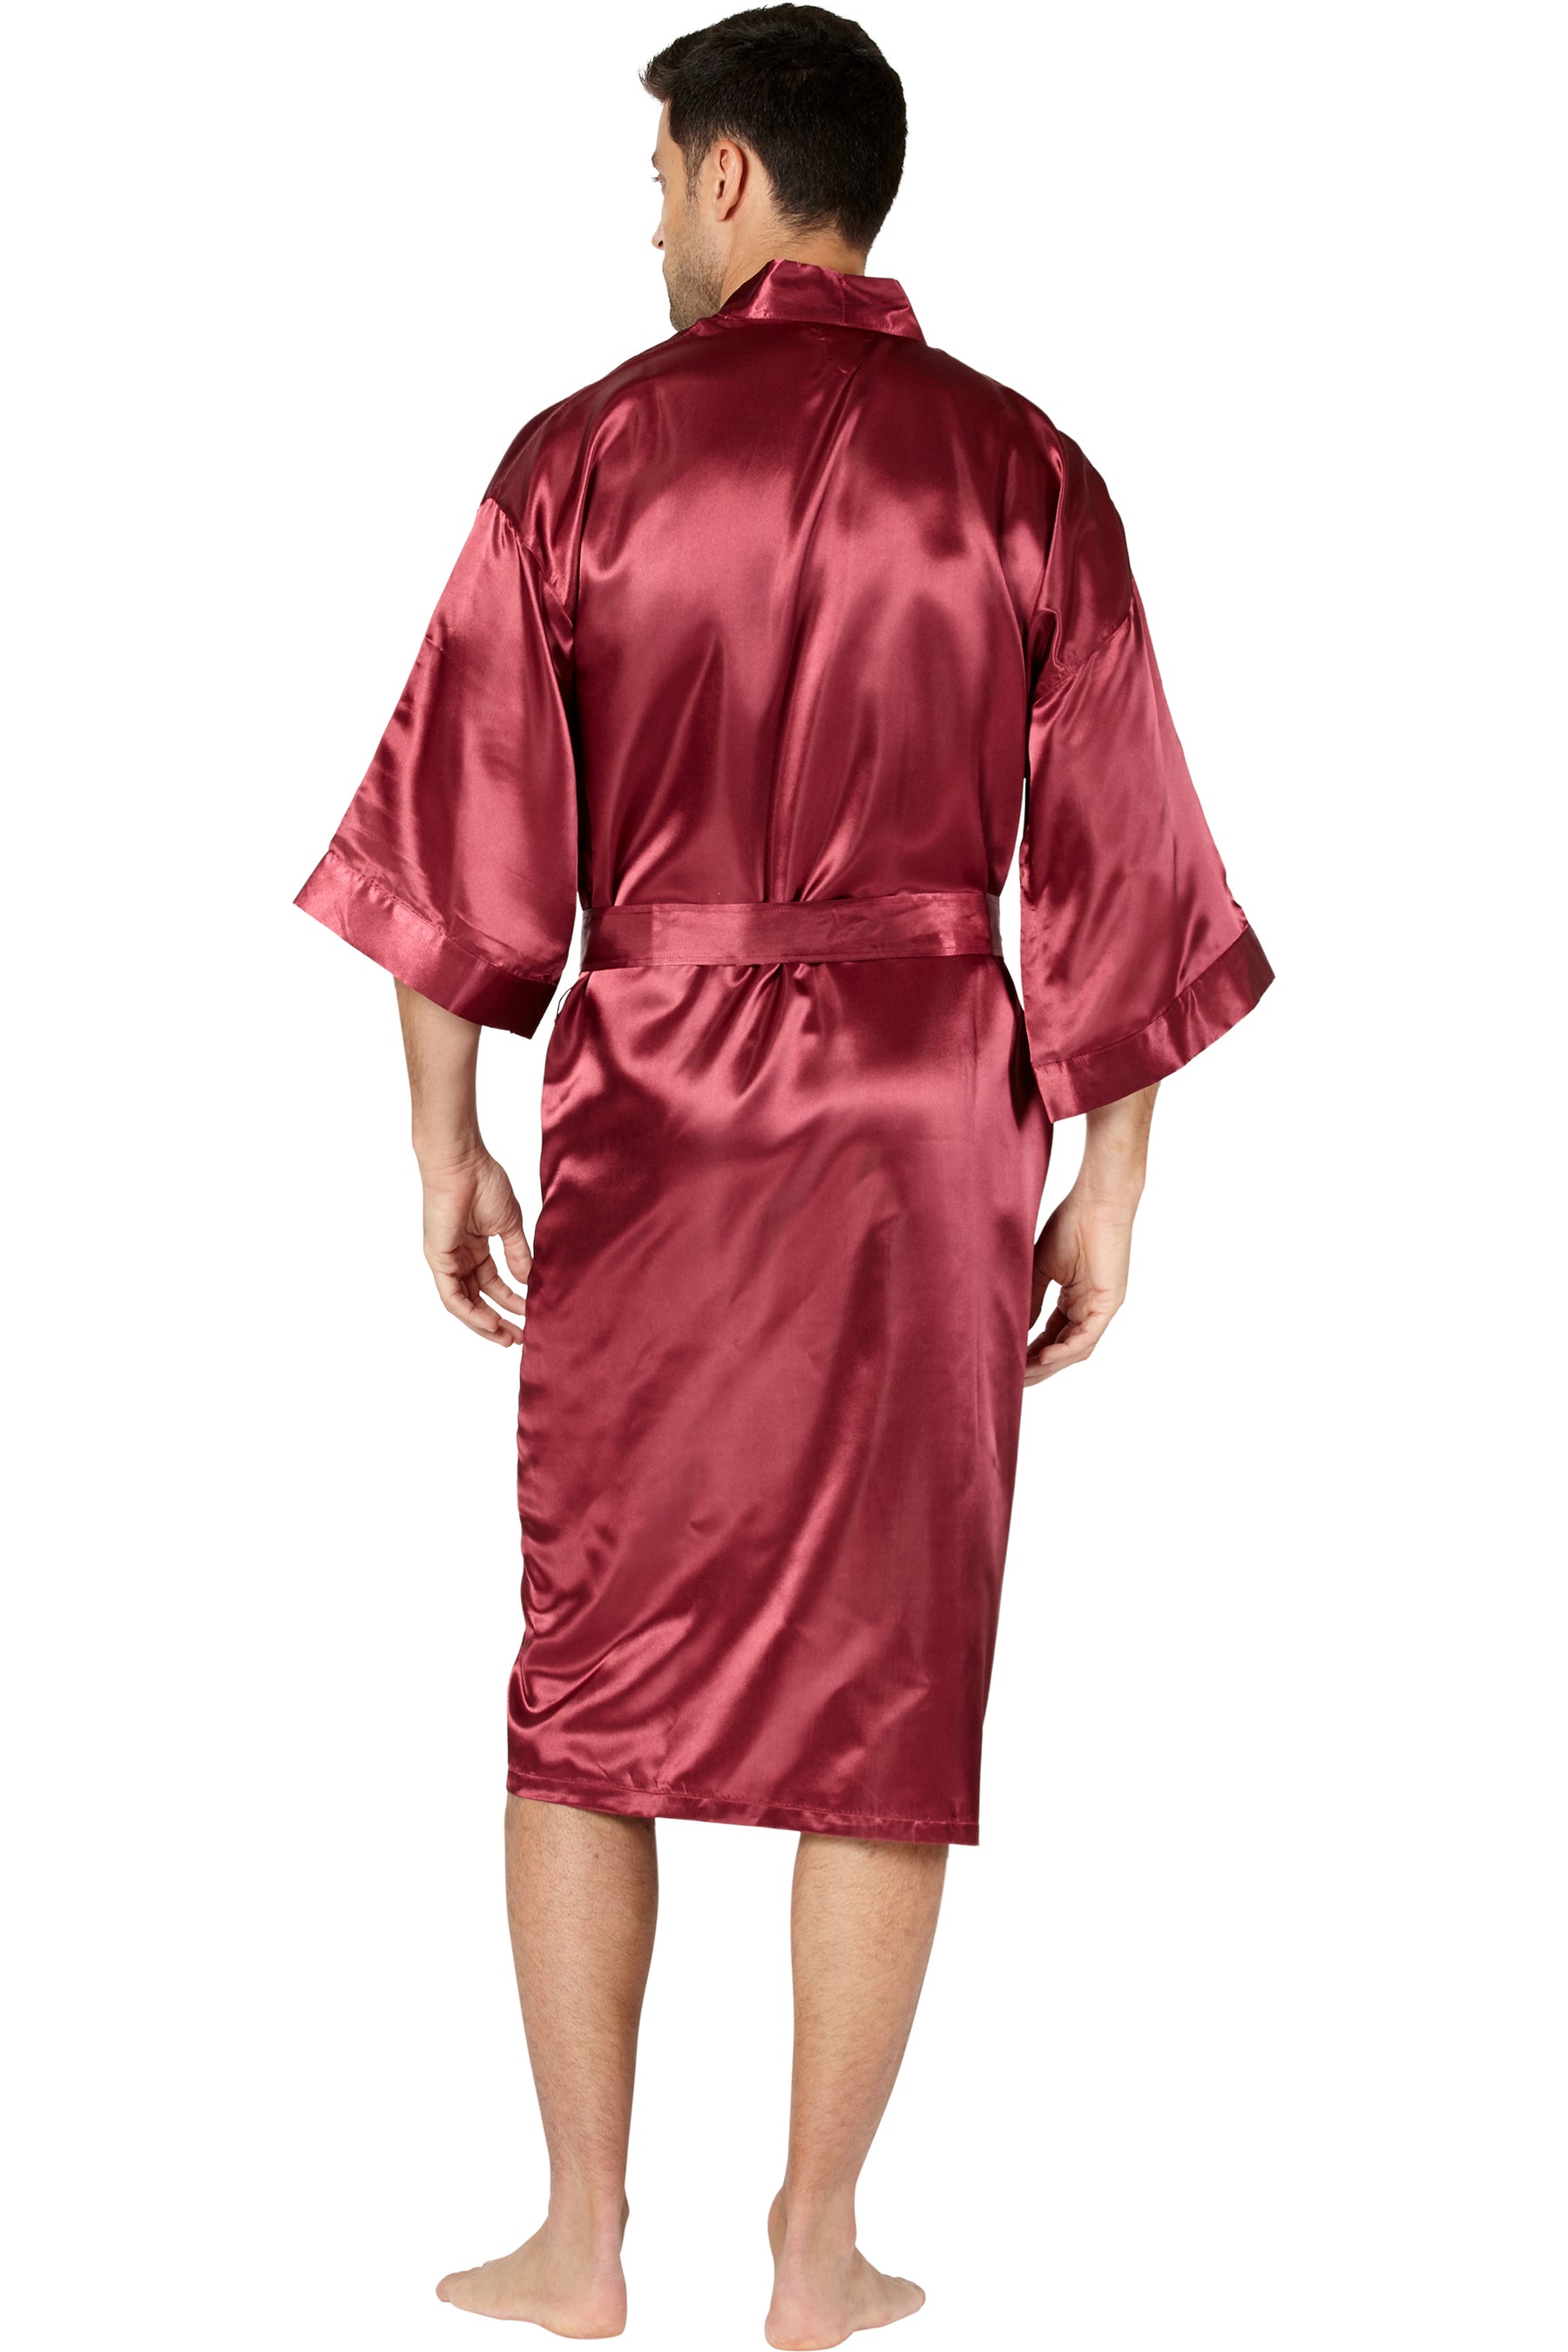 Womens Silk Satin Robe ( with Belt ) USA Seller FAST SHIPPING 5 Day Ship |  eBay